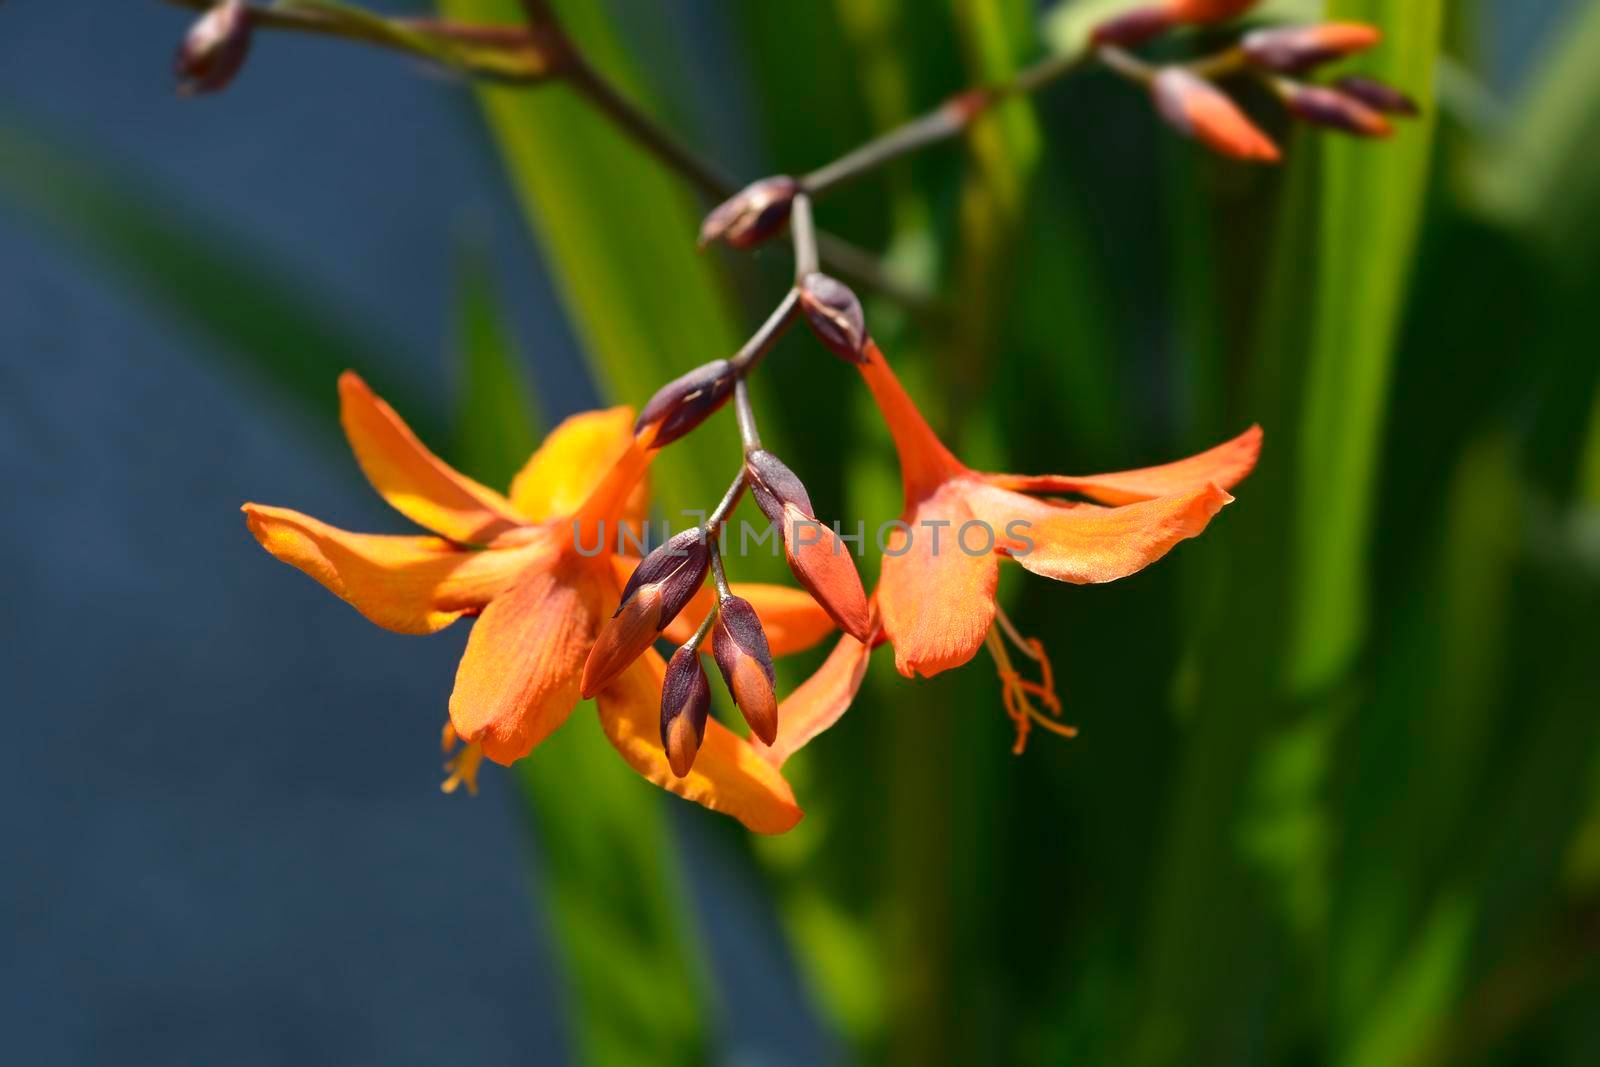 Montbretia Emily McKenzie flowers - Latin name - Crocosmia x crocosmiiflora Emily McKenzie